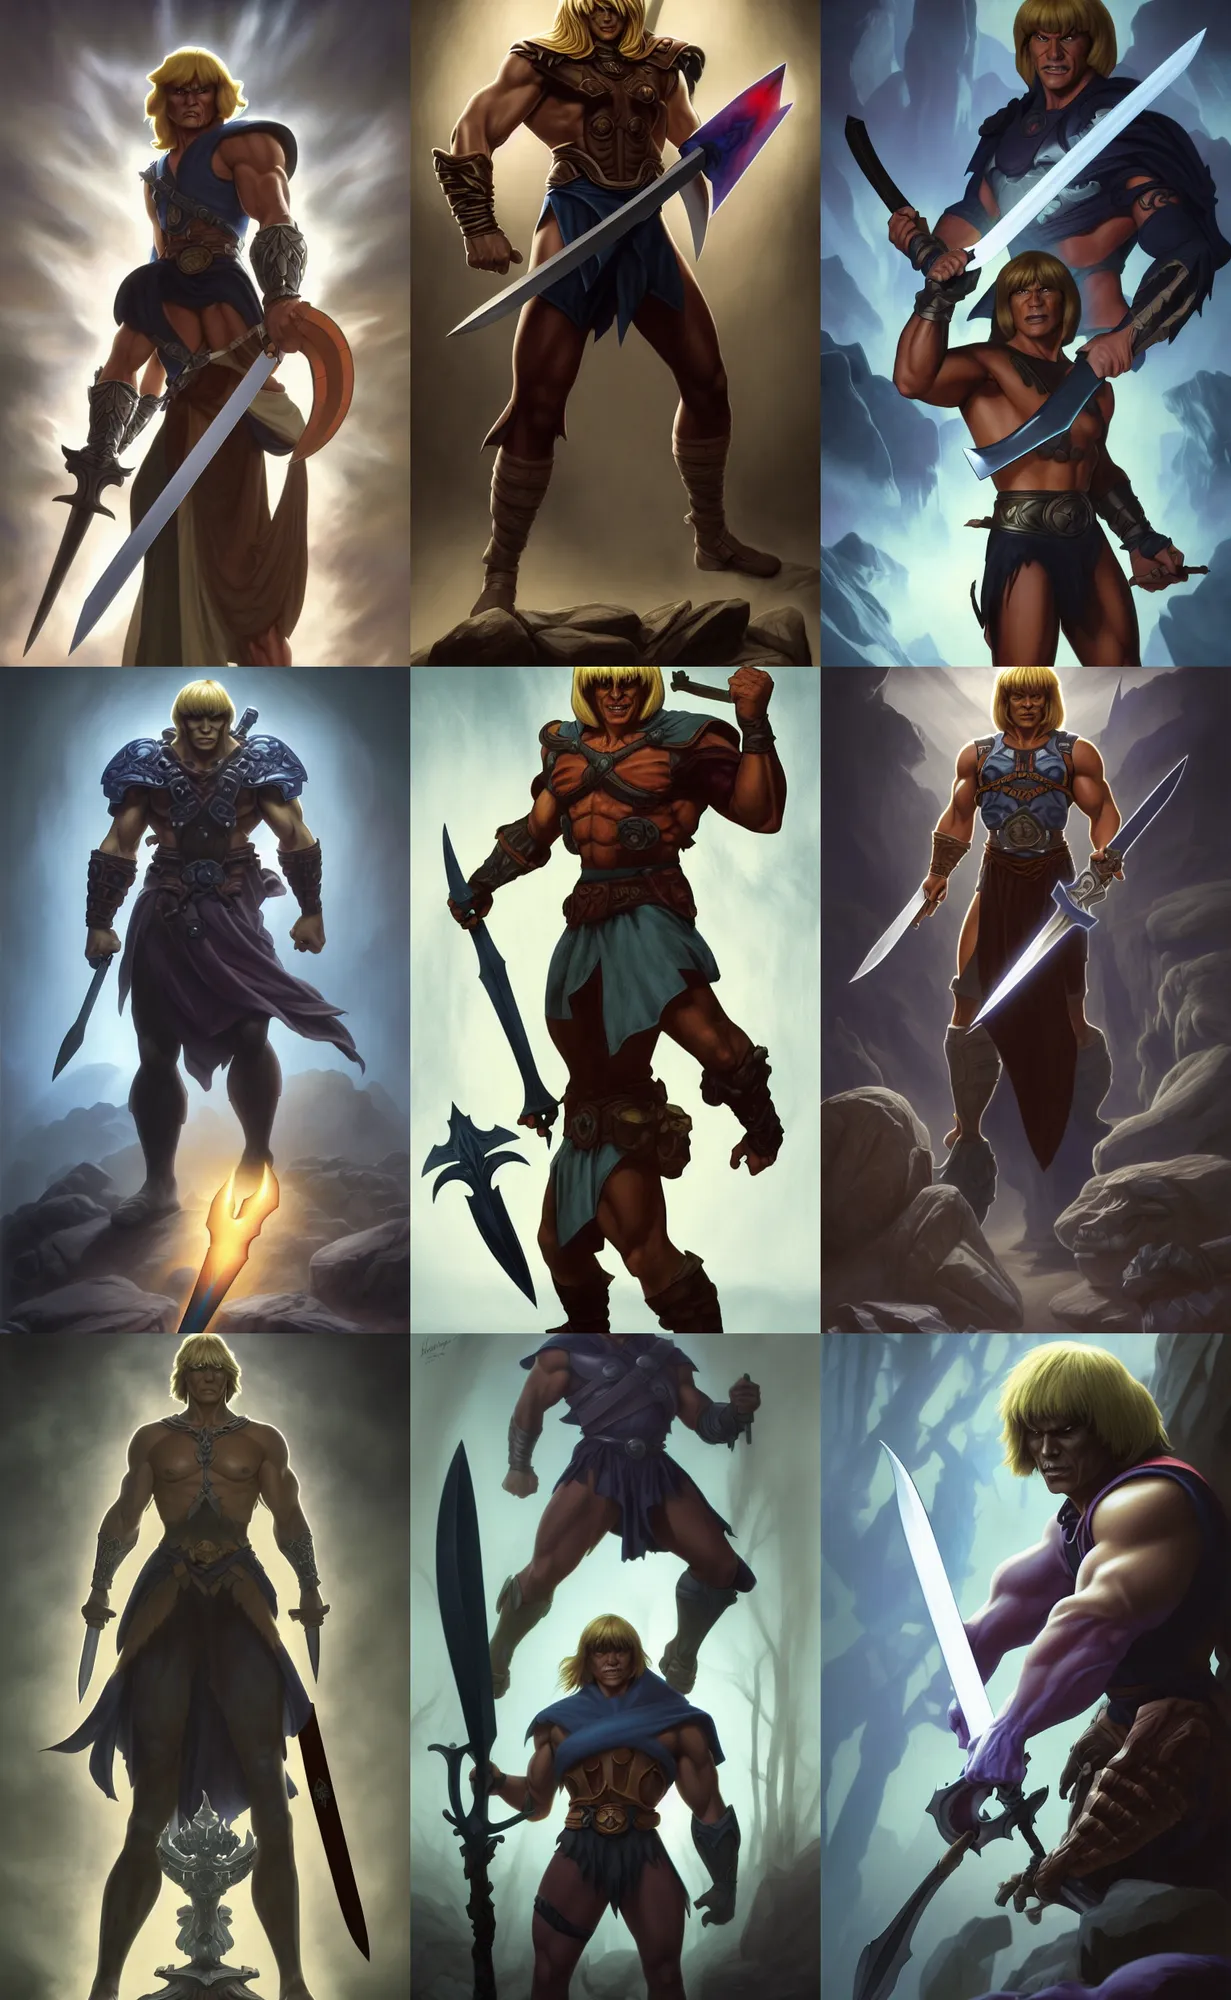 He-man characters